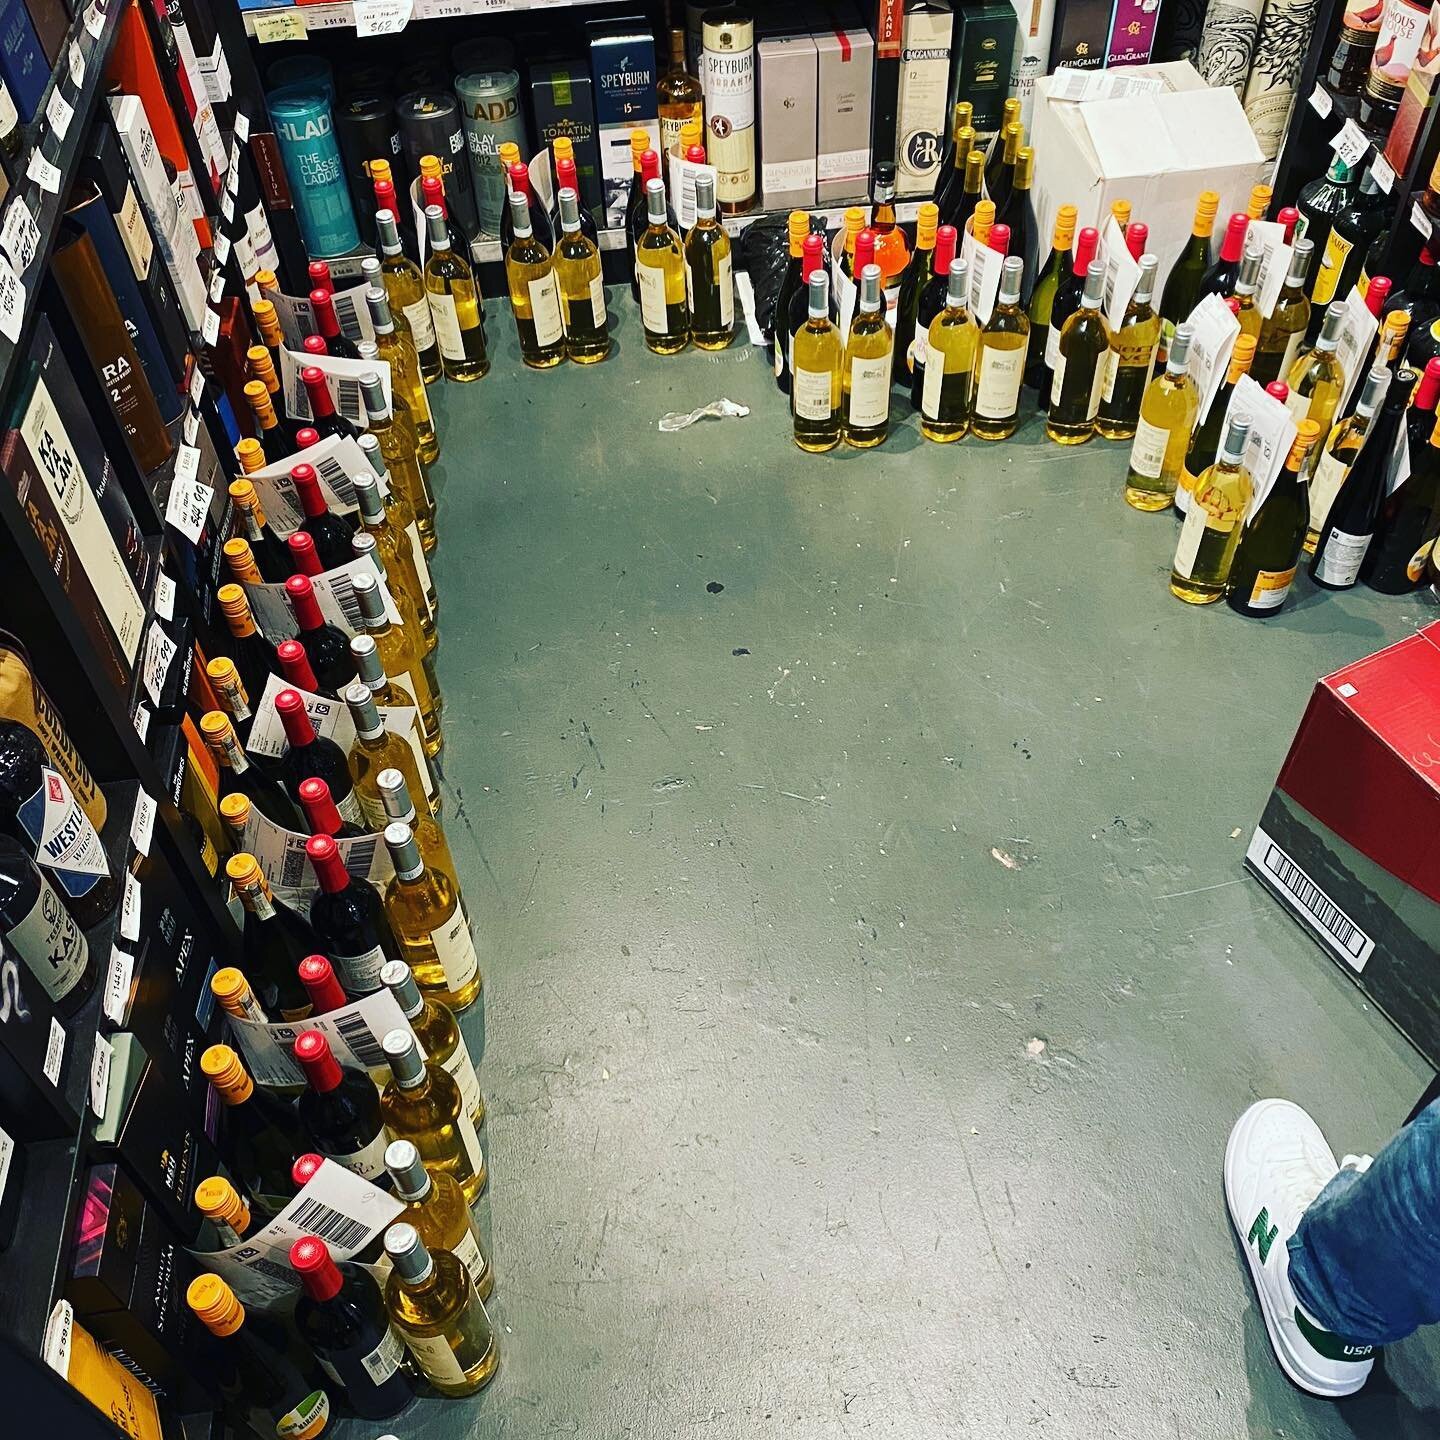 That&rsquo;s a lot of wine that&rsquo;s ready to ship! #savethegrape 

#wine #wines #italy #garganega #winetime #wineoclock #winetasting #winetastings #winetasting🍷 #vino #gvino